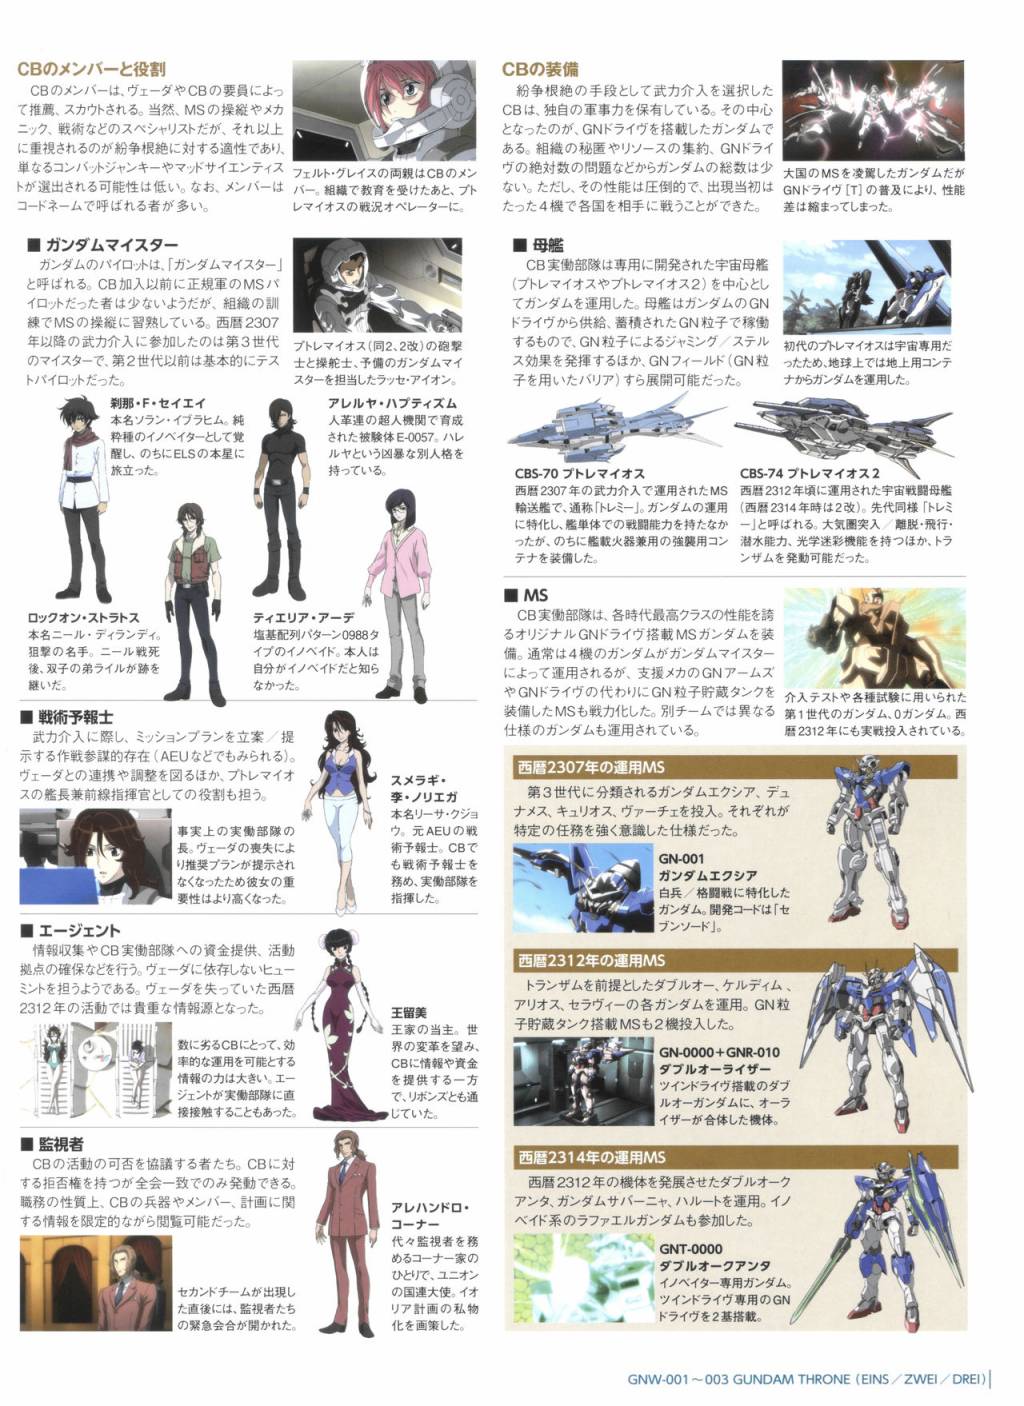 Gundam Mobile Suit Bible - 75卷 - 6